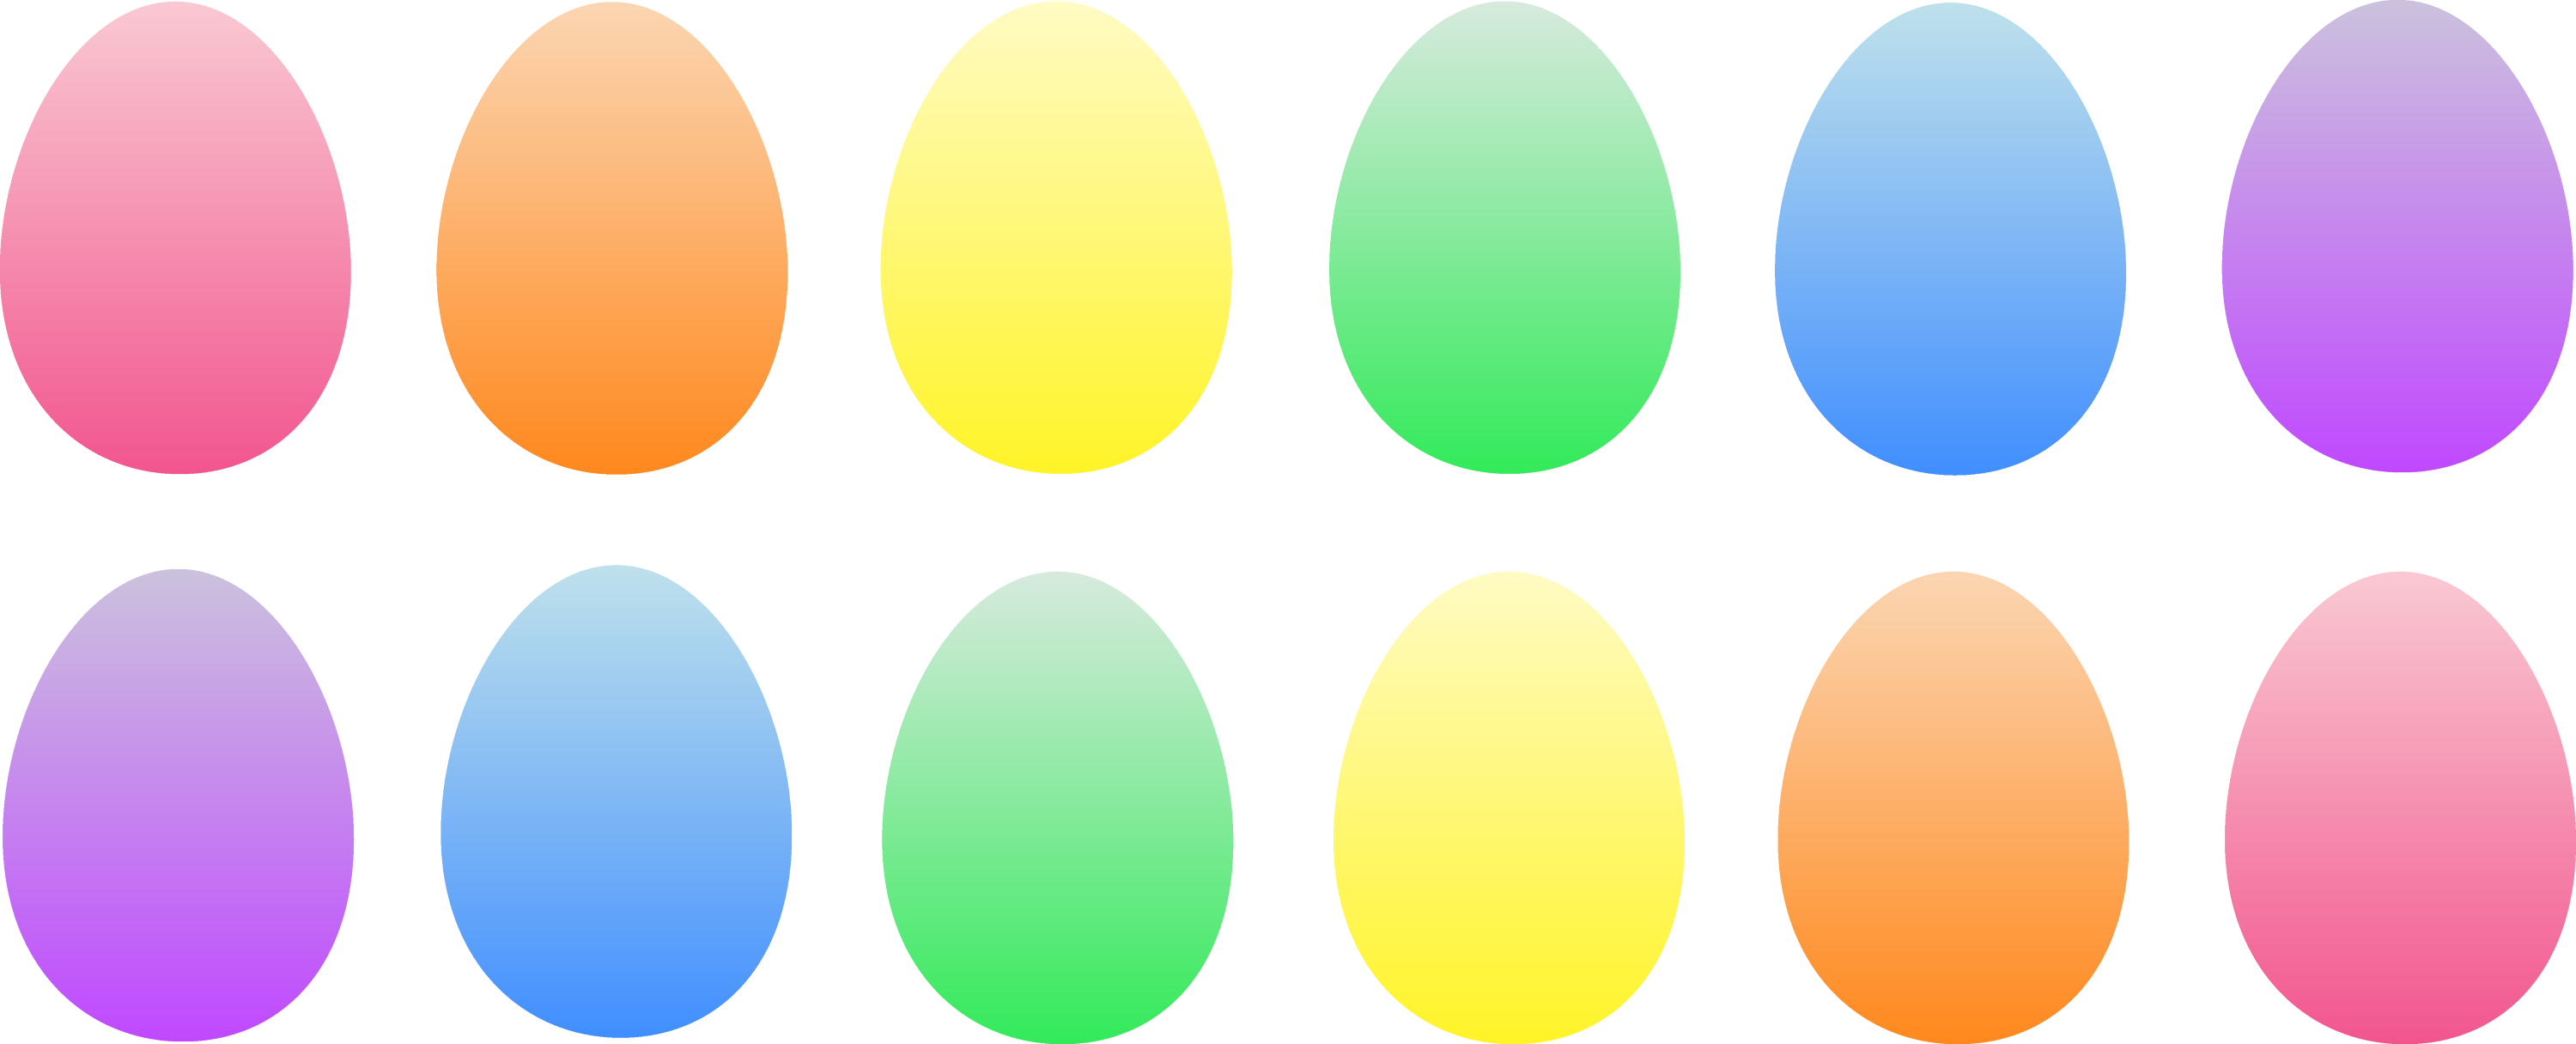 clip art free easter eggs - photo #41